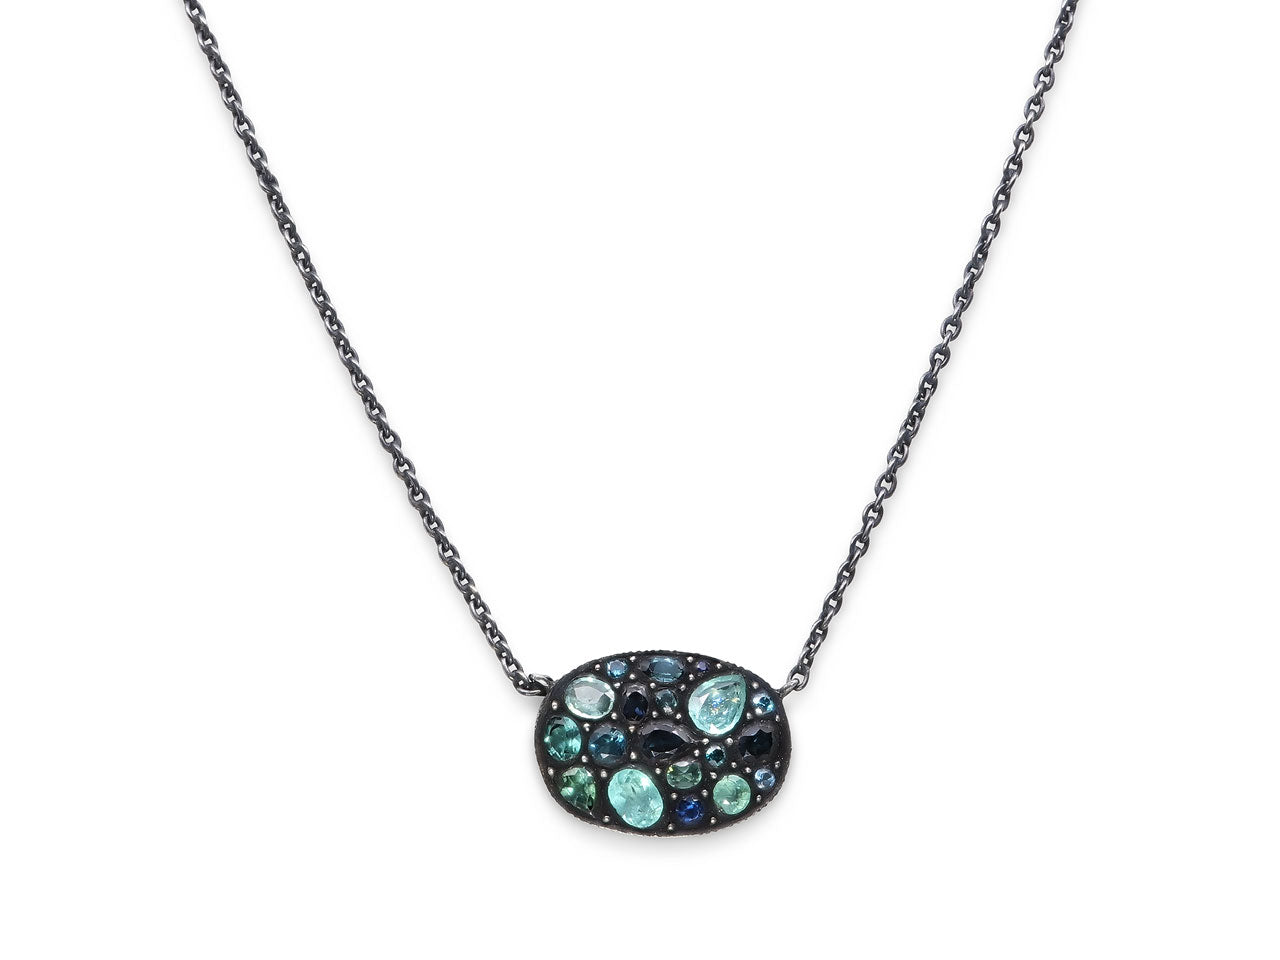 Gemstone 'Sara' Necklace in 18K Blackened Silver, by Yossi Harari